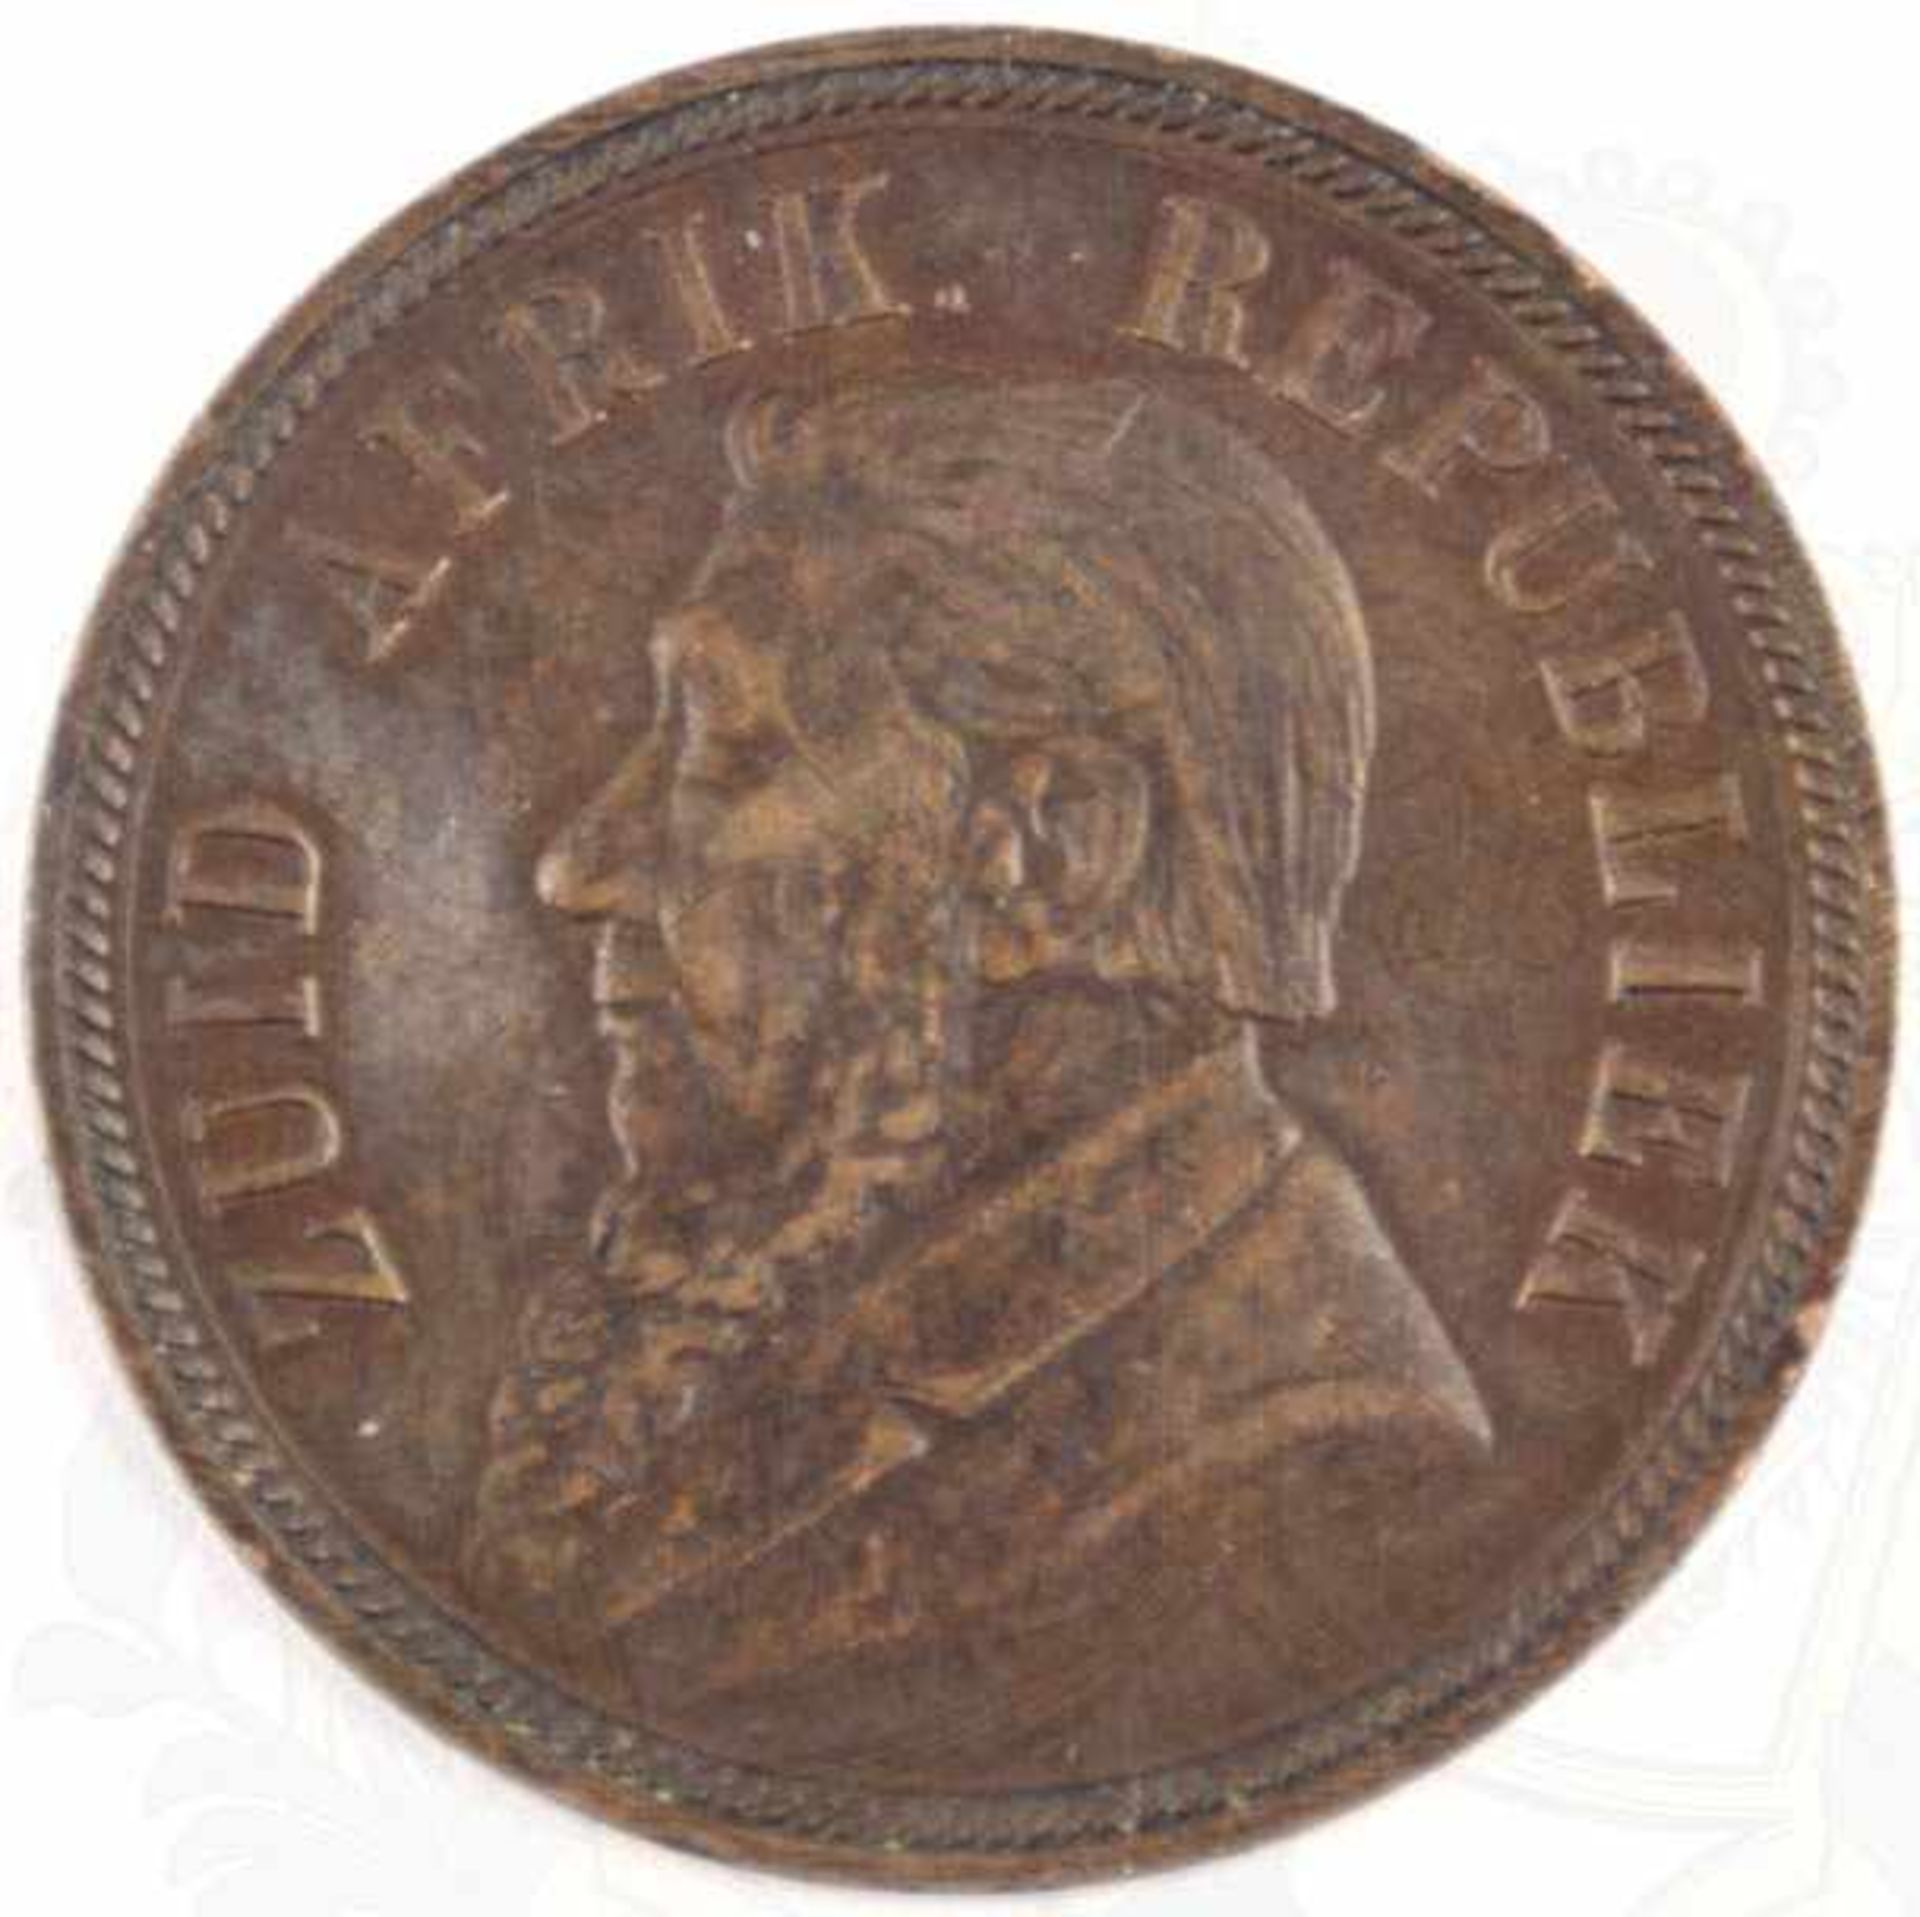 1 PENNY SÜDAFRIKA 1898, Bronze, mit Portrait Paul „Ohm“ Krüger u. Wappen, Ø 31mm, seltener Jahrgang